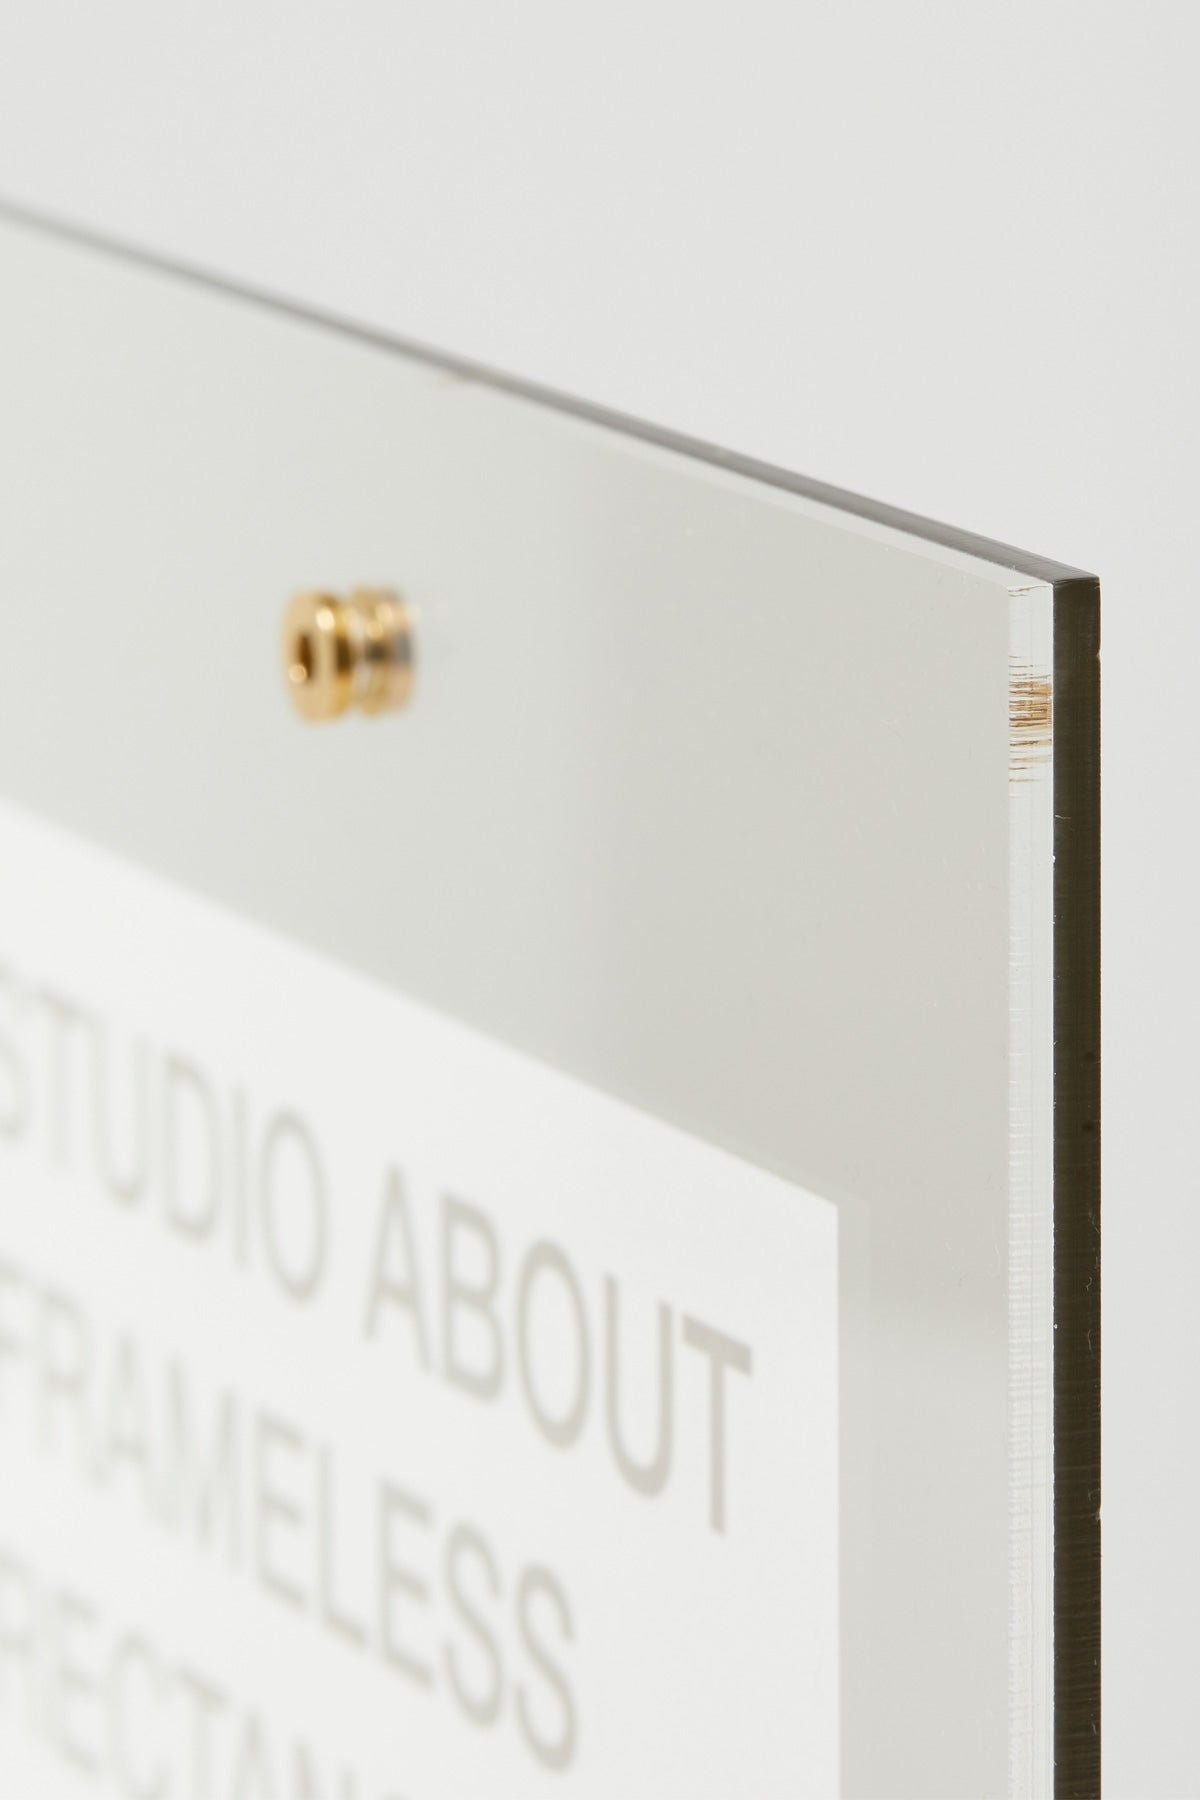 Studio over frameless frame A4 -rechthoek, rook